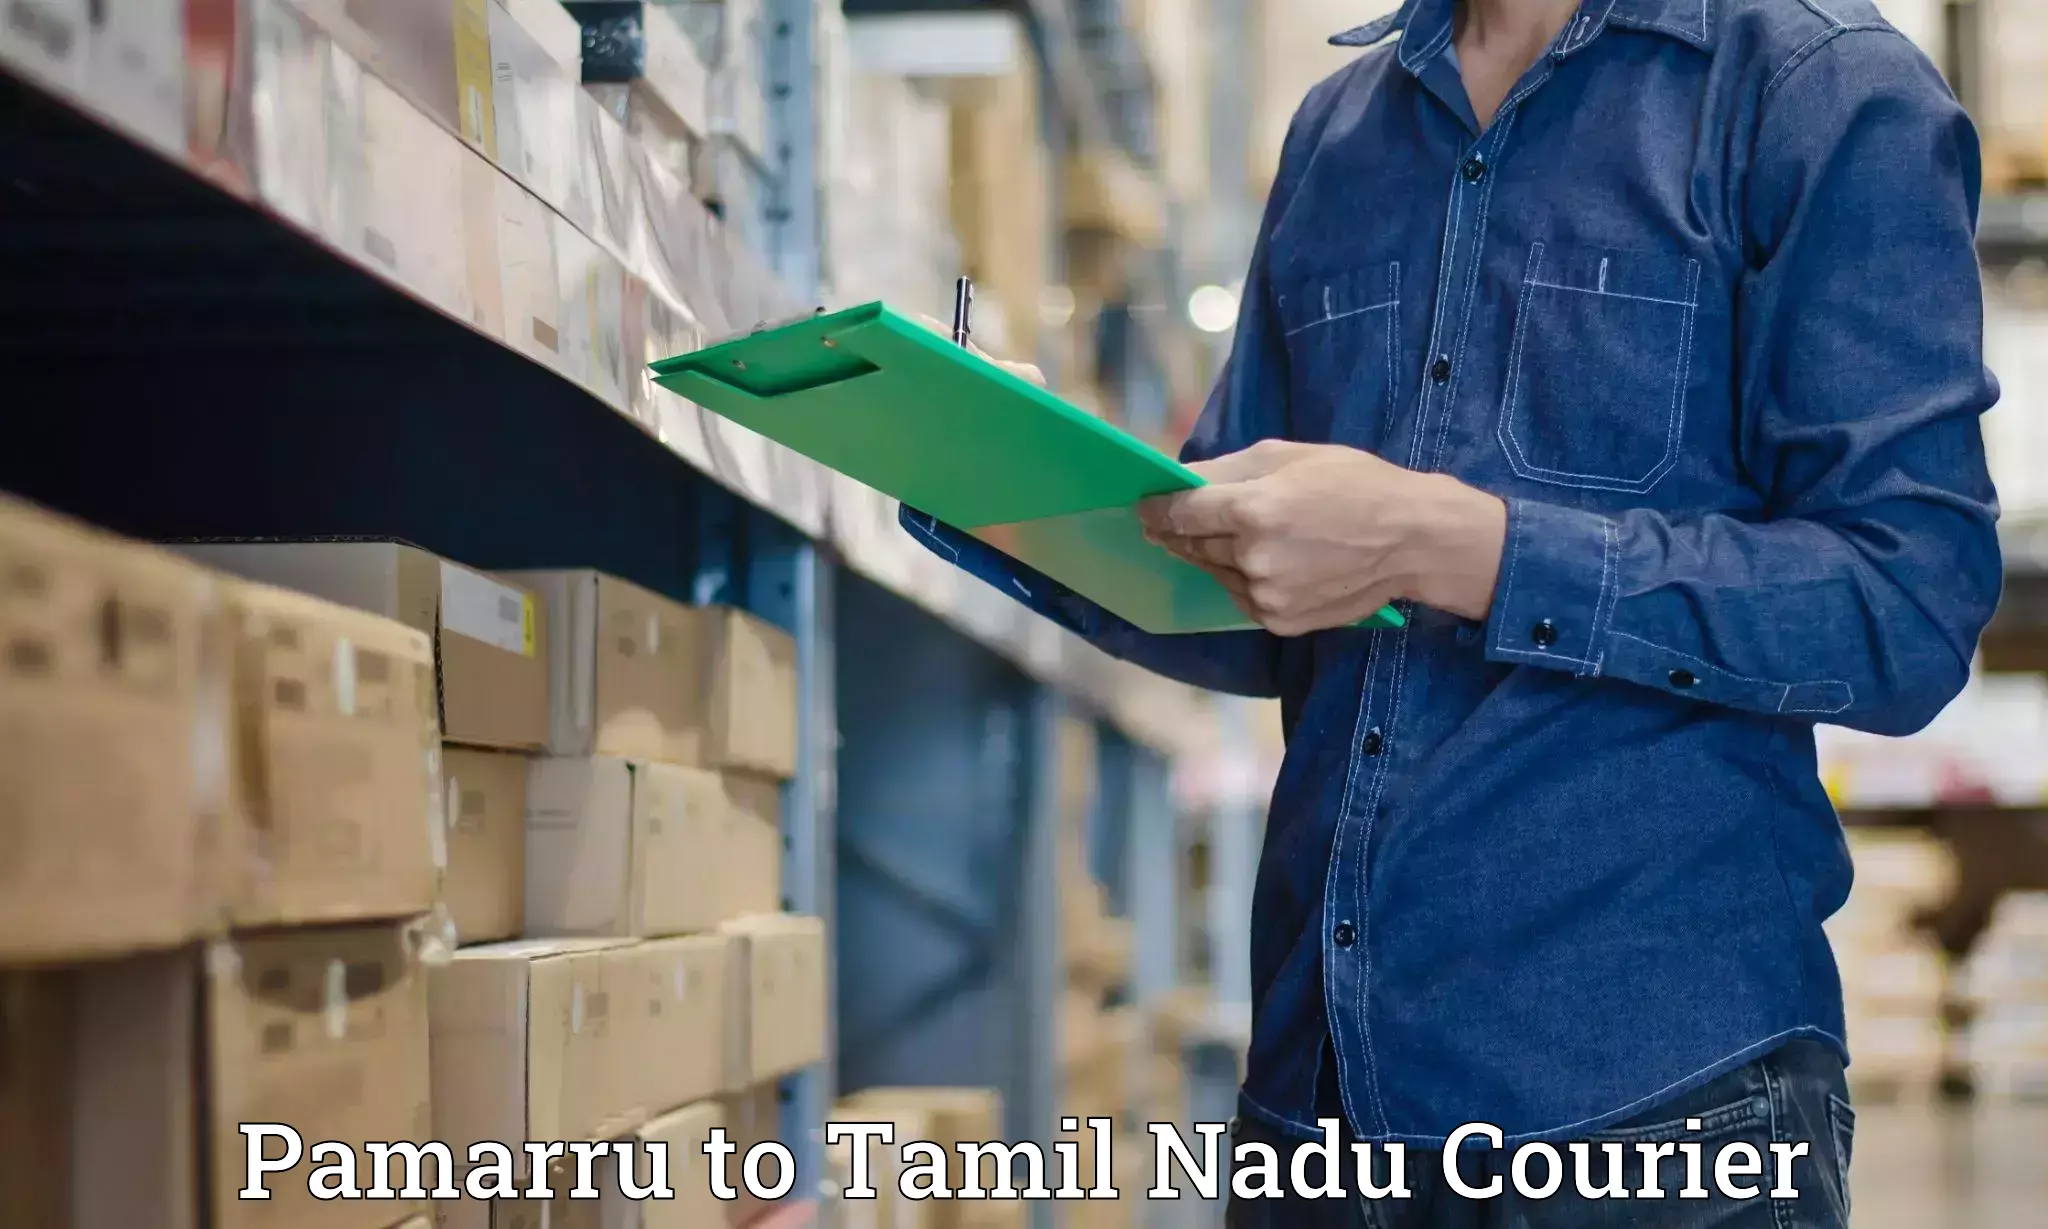 Express delivery network Pamarru to Tamil Nadu